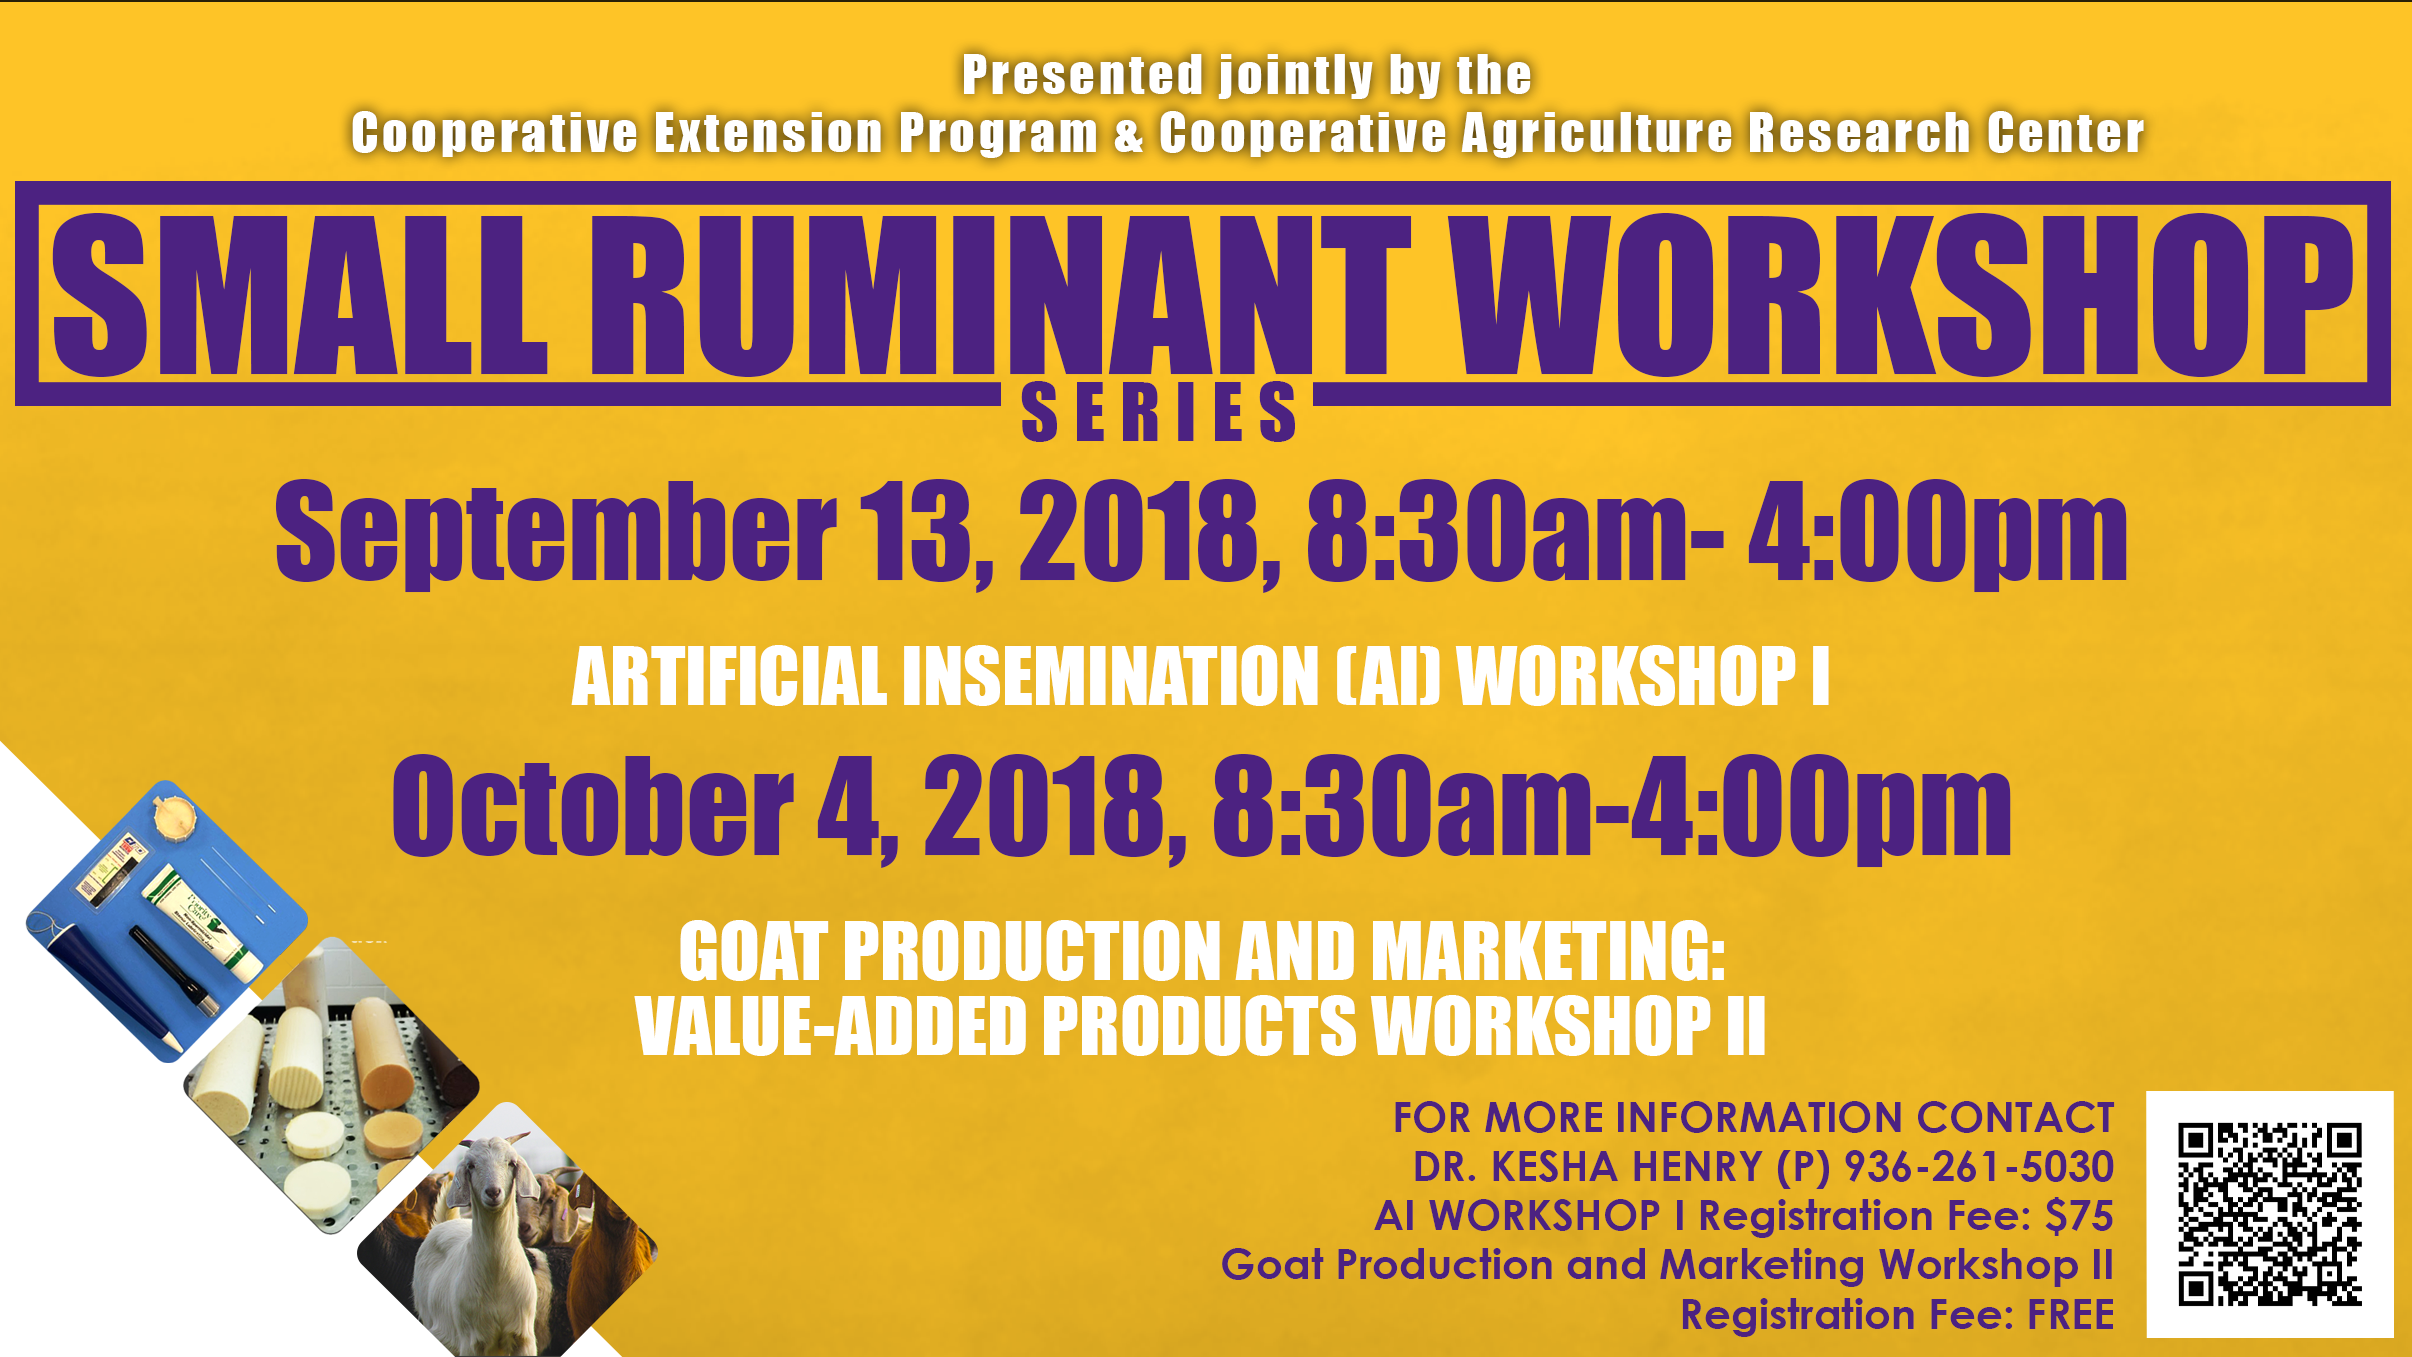 Small Ruminant Workshop Series Flyer